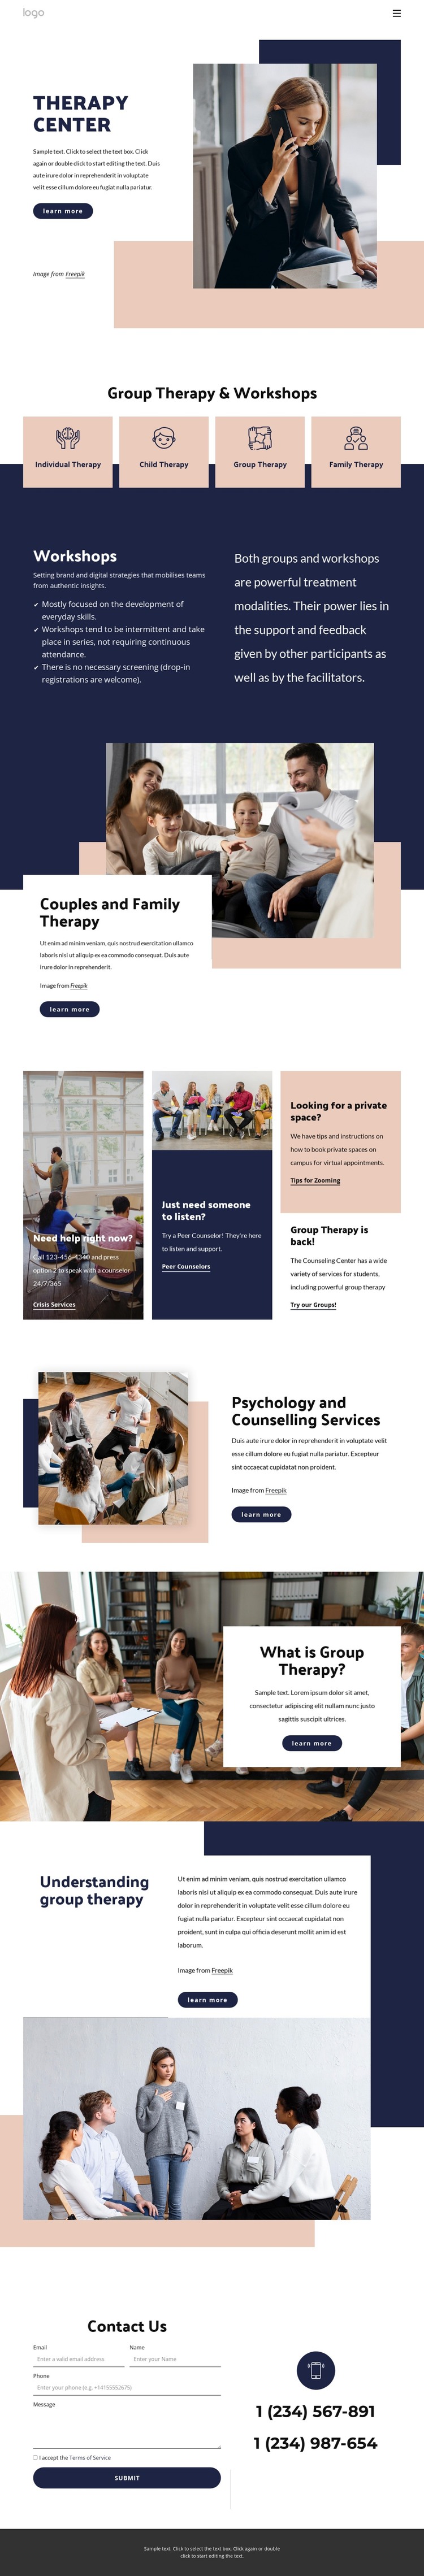 Therapy center Web Design